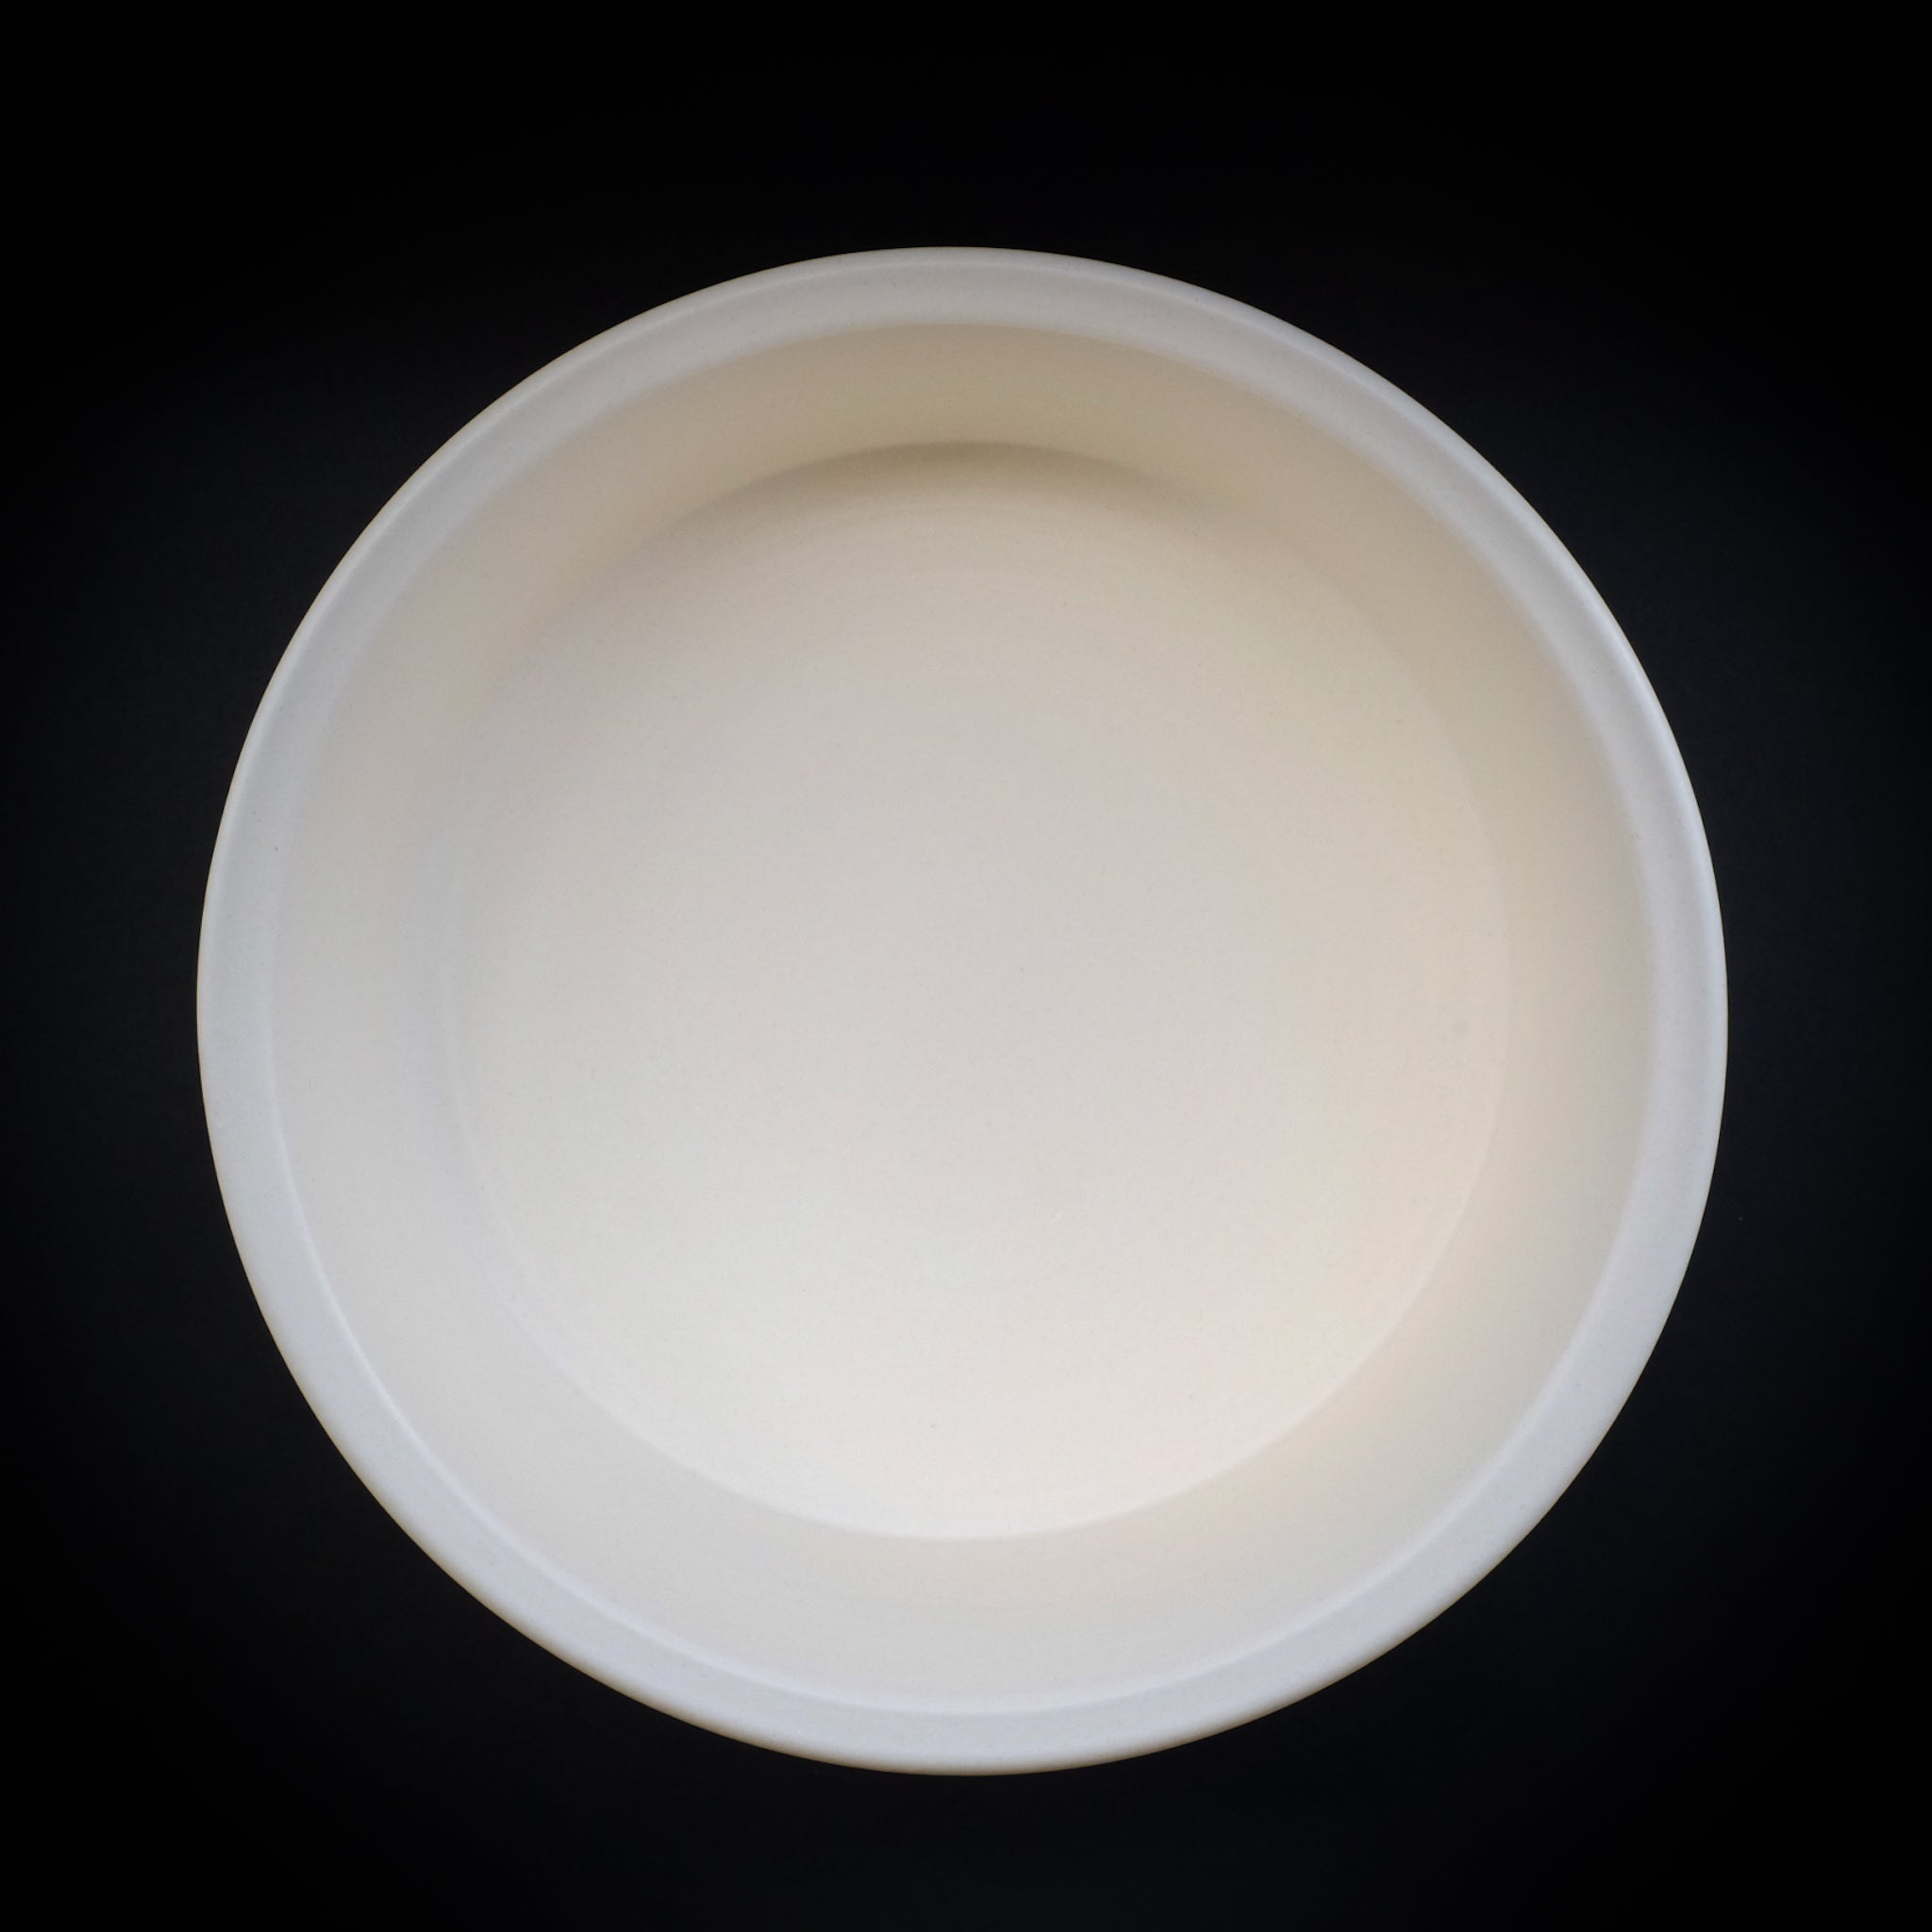 大谷製陶所 ( 大谷哲也 ) 平鍋 深 φ24 cm    Otani Pottery Studio ( Tetsuya Otani ) Hiranabe earthenware pan  Deep φ24 cm